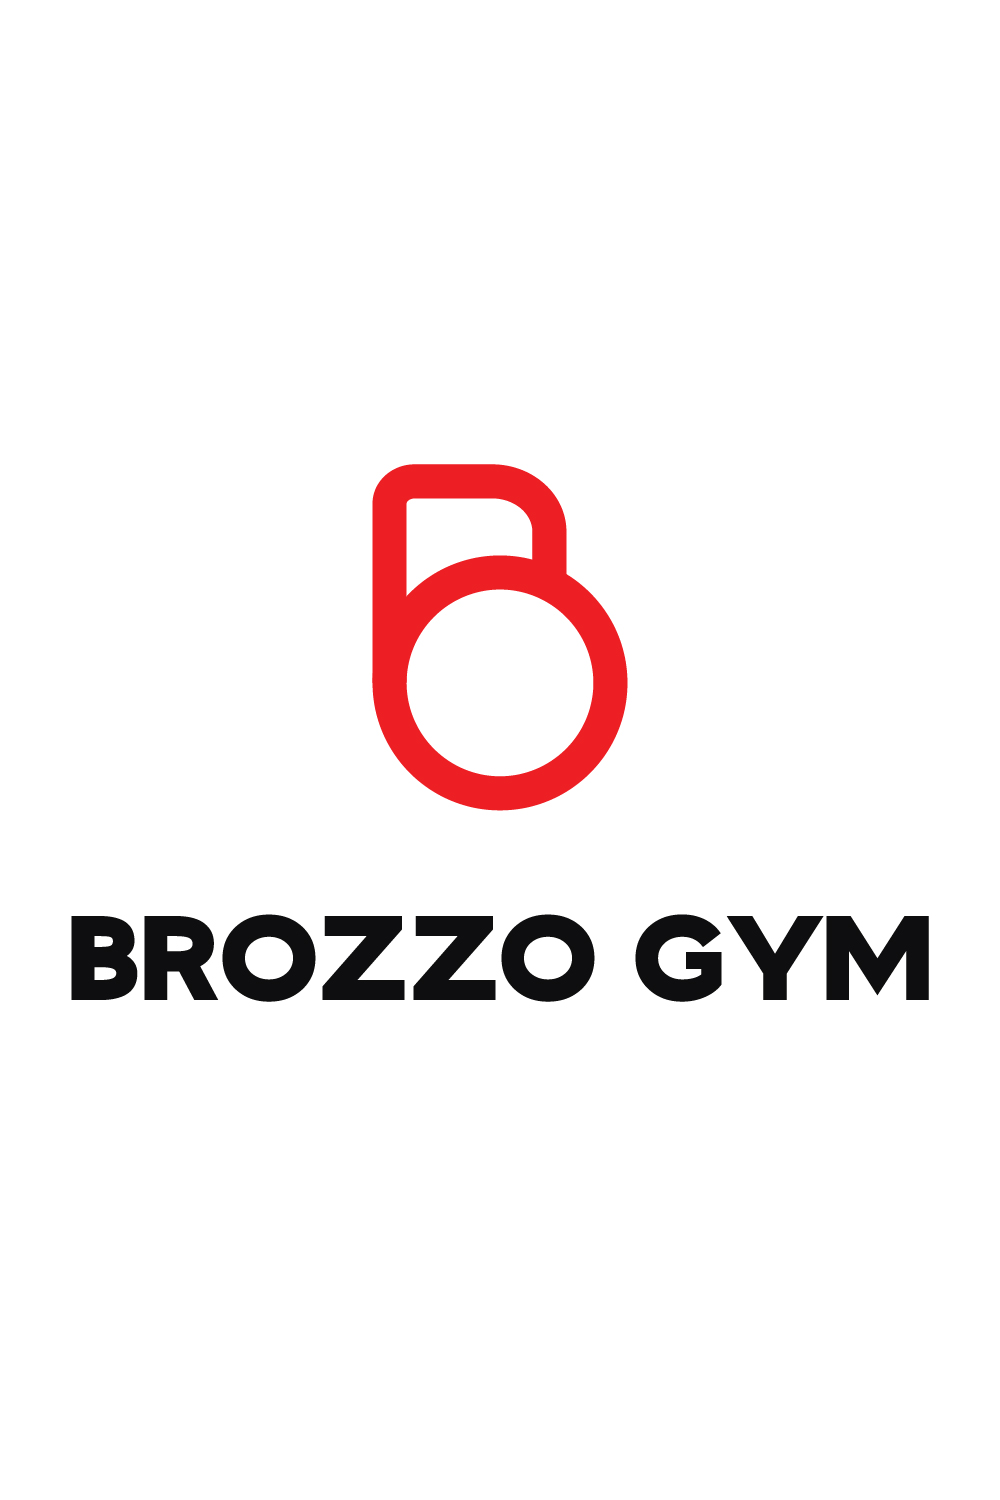 Fitness Logo Brozzo Design Template pinterest image.